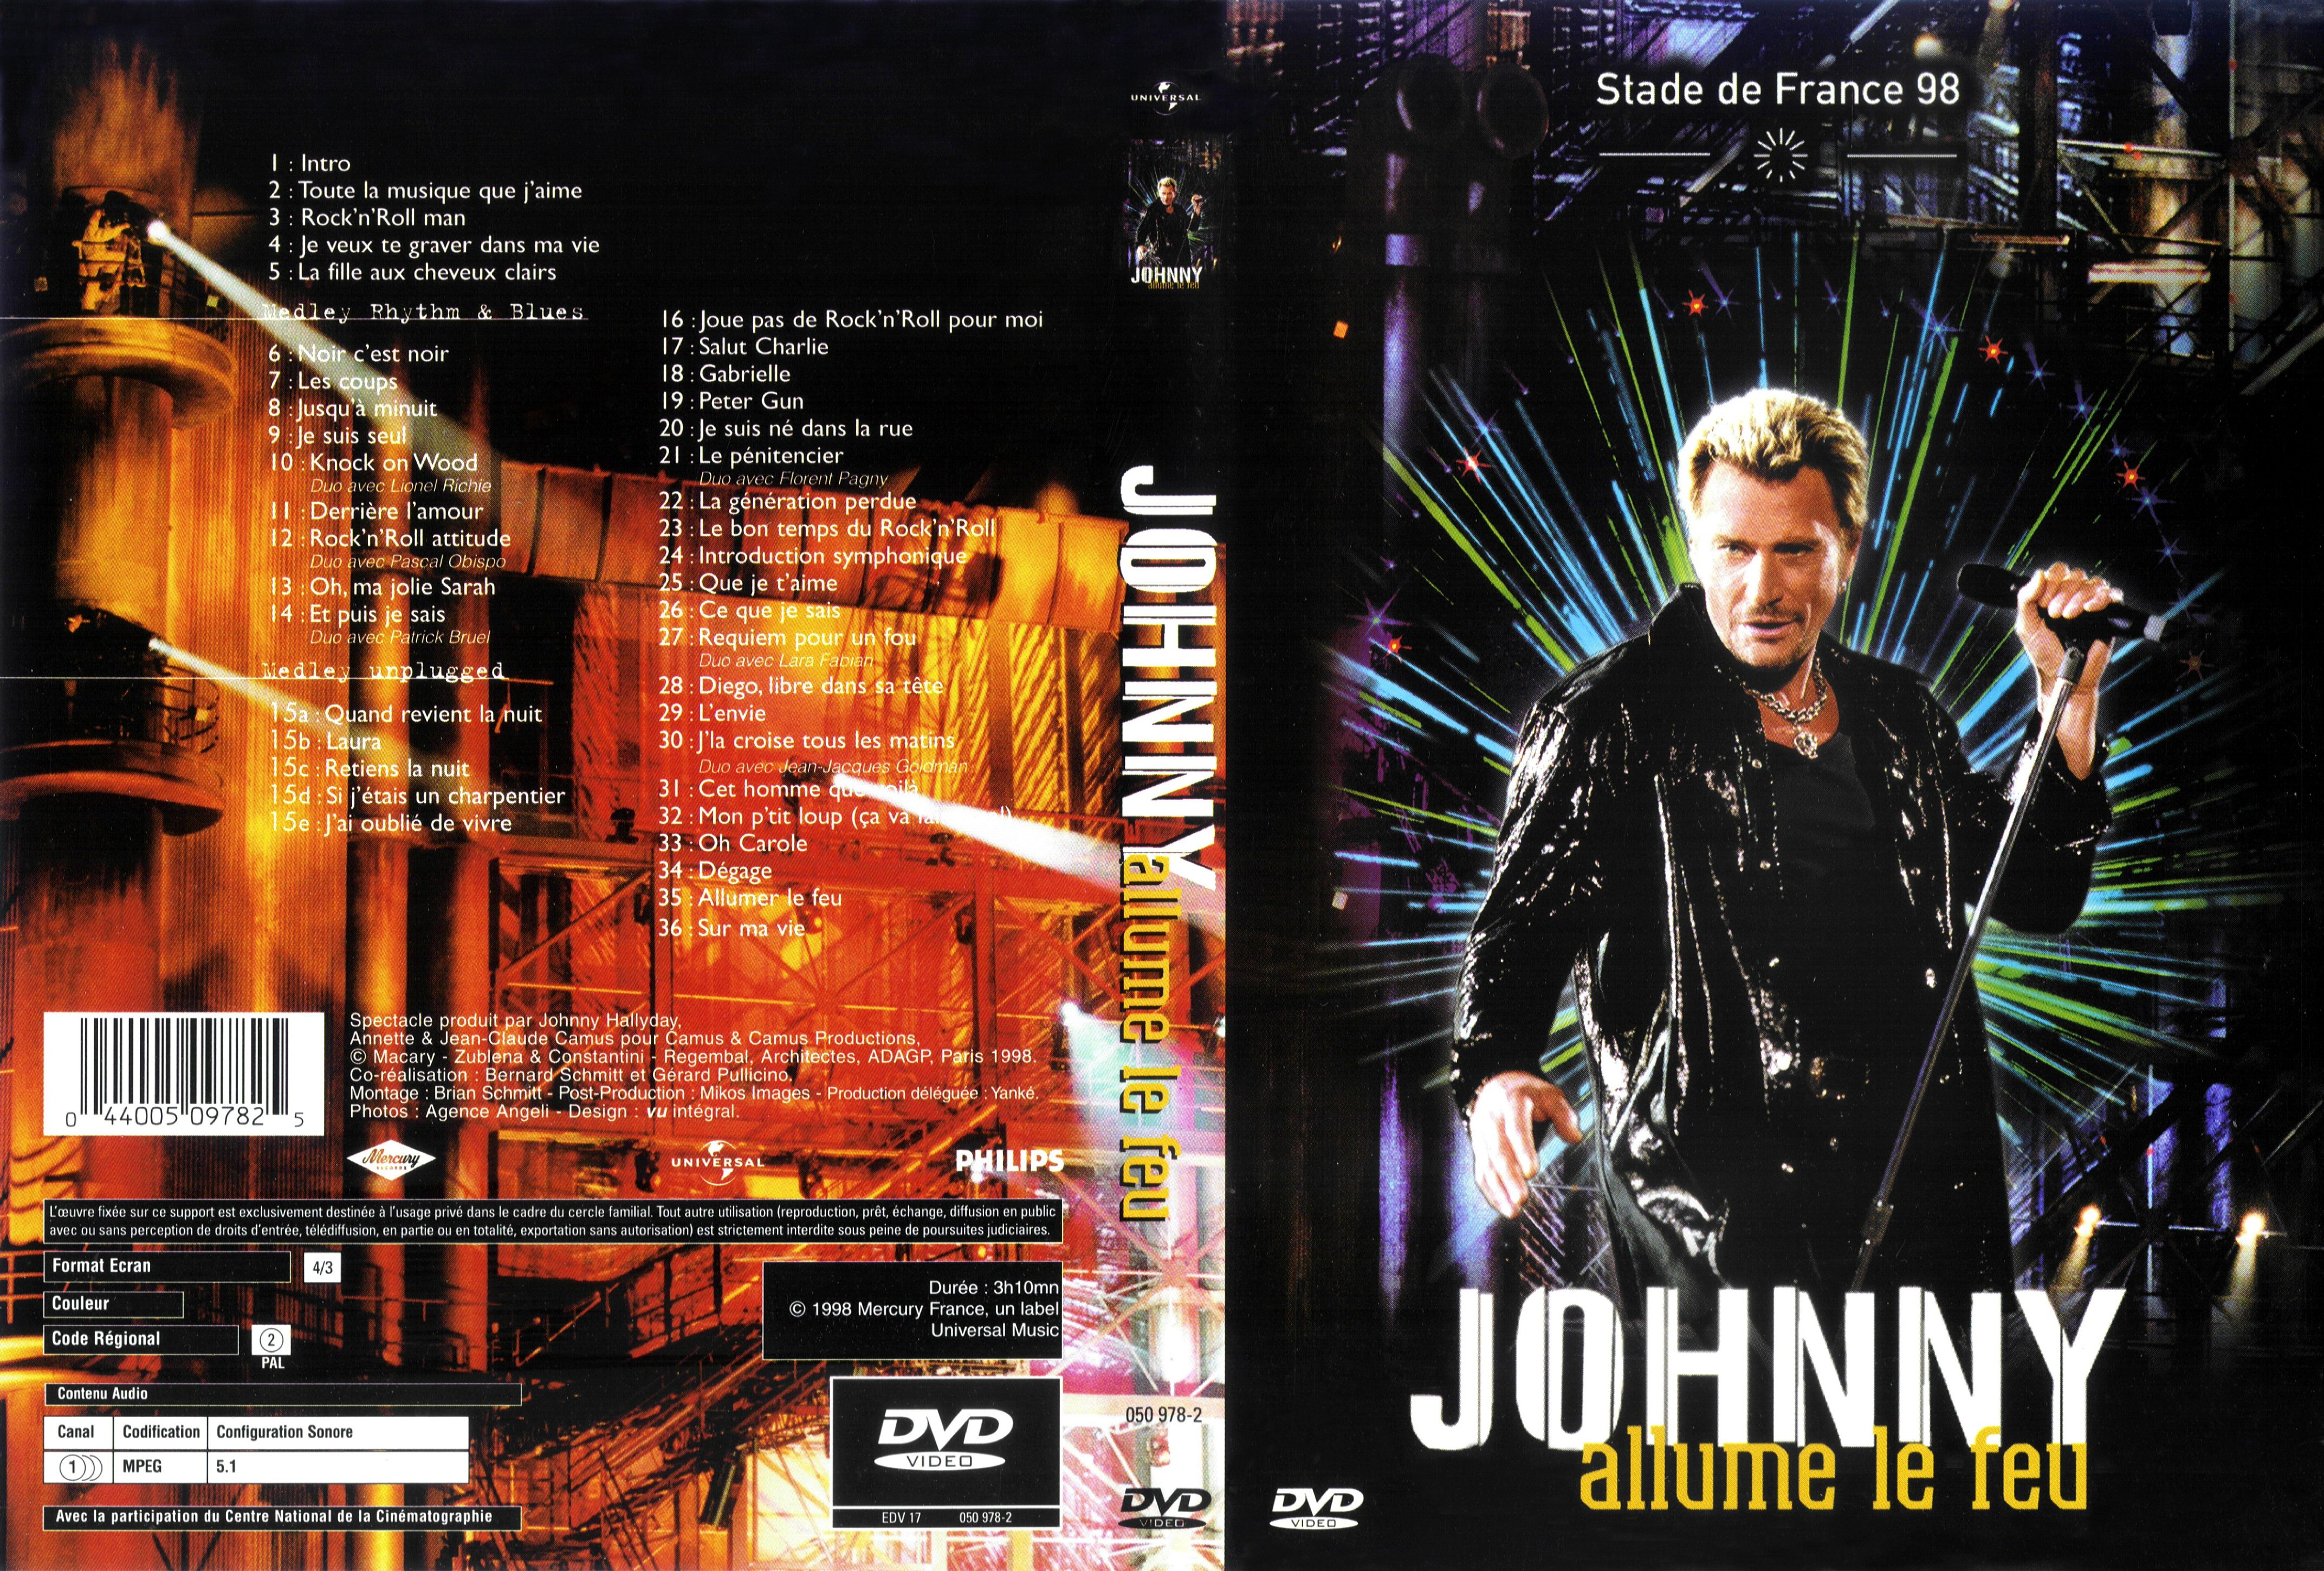 Jaquette DVD Johnny Hallyday Allume le feu